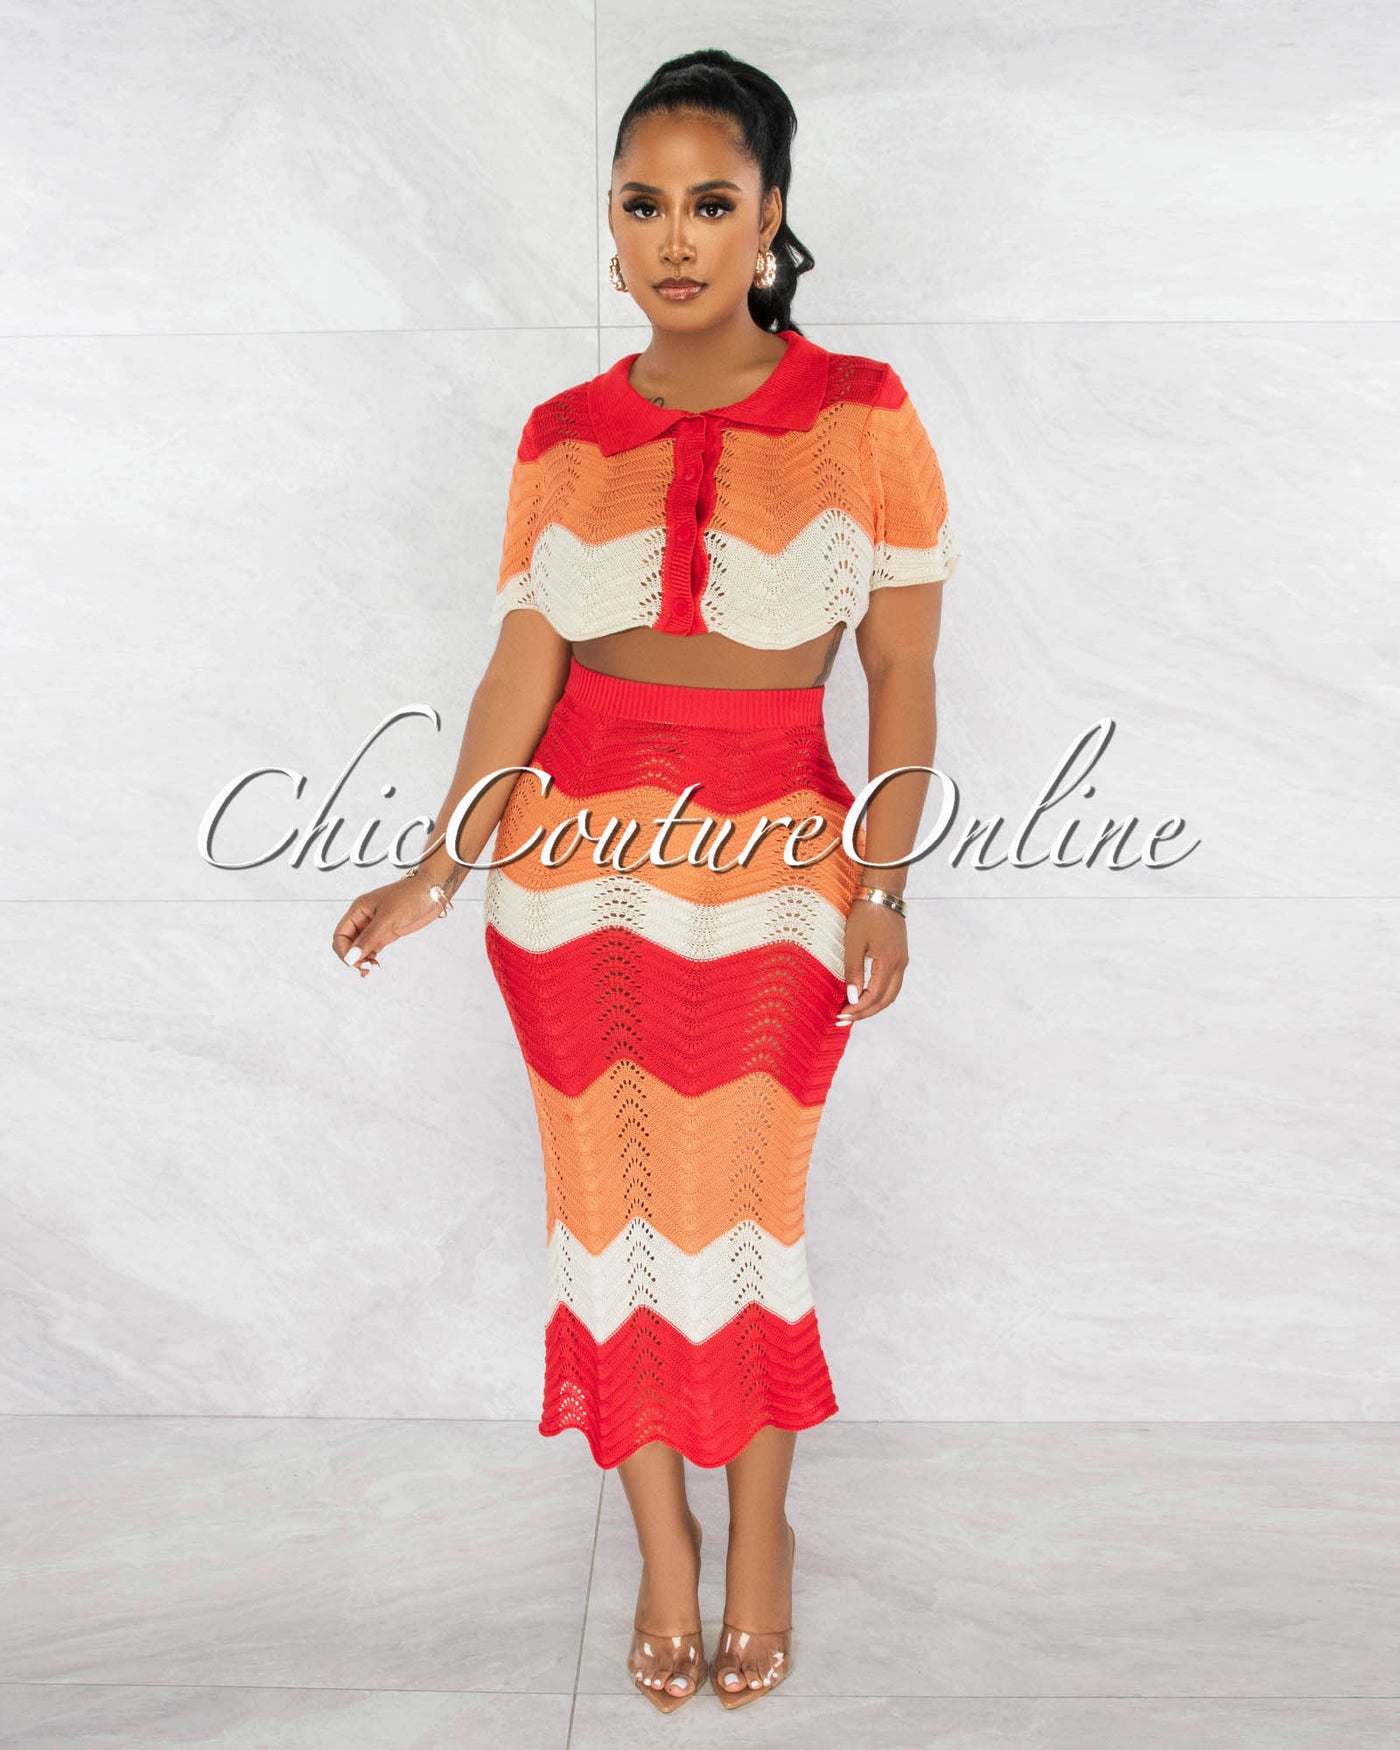 Tiana Cream Orange Chevron Crop Top & Crochet Cover-Up Skirt Set